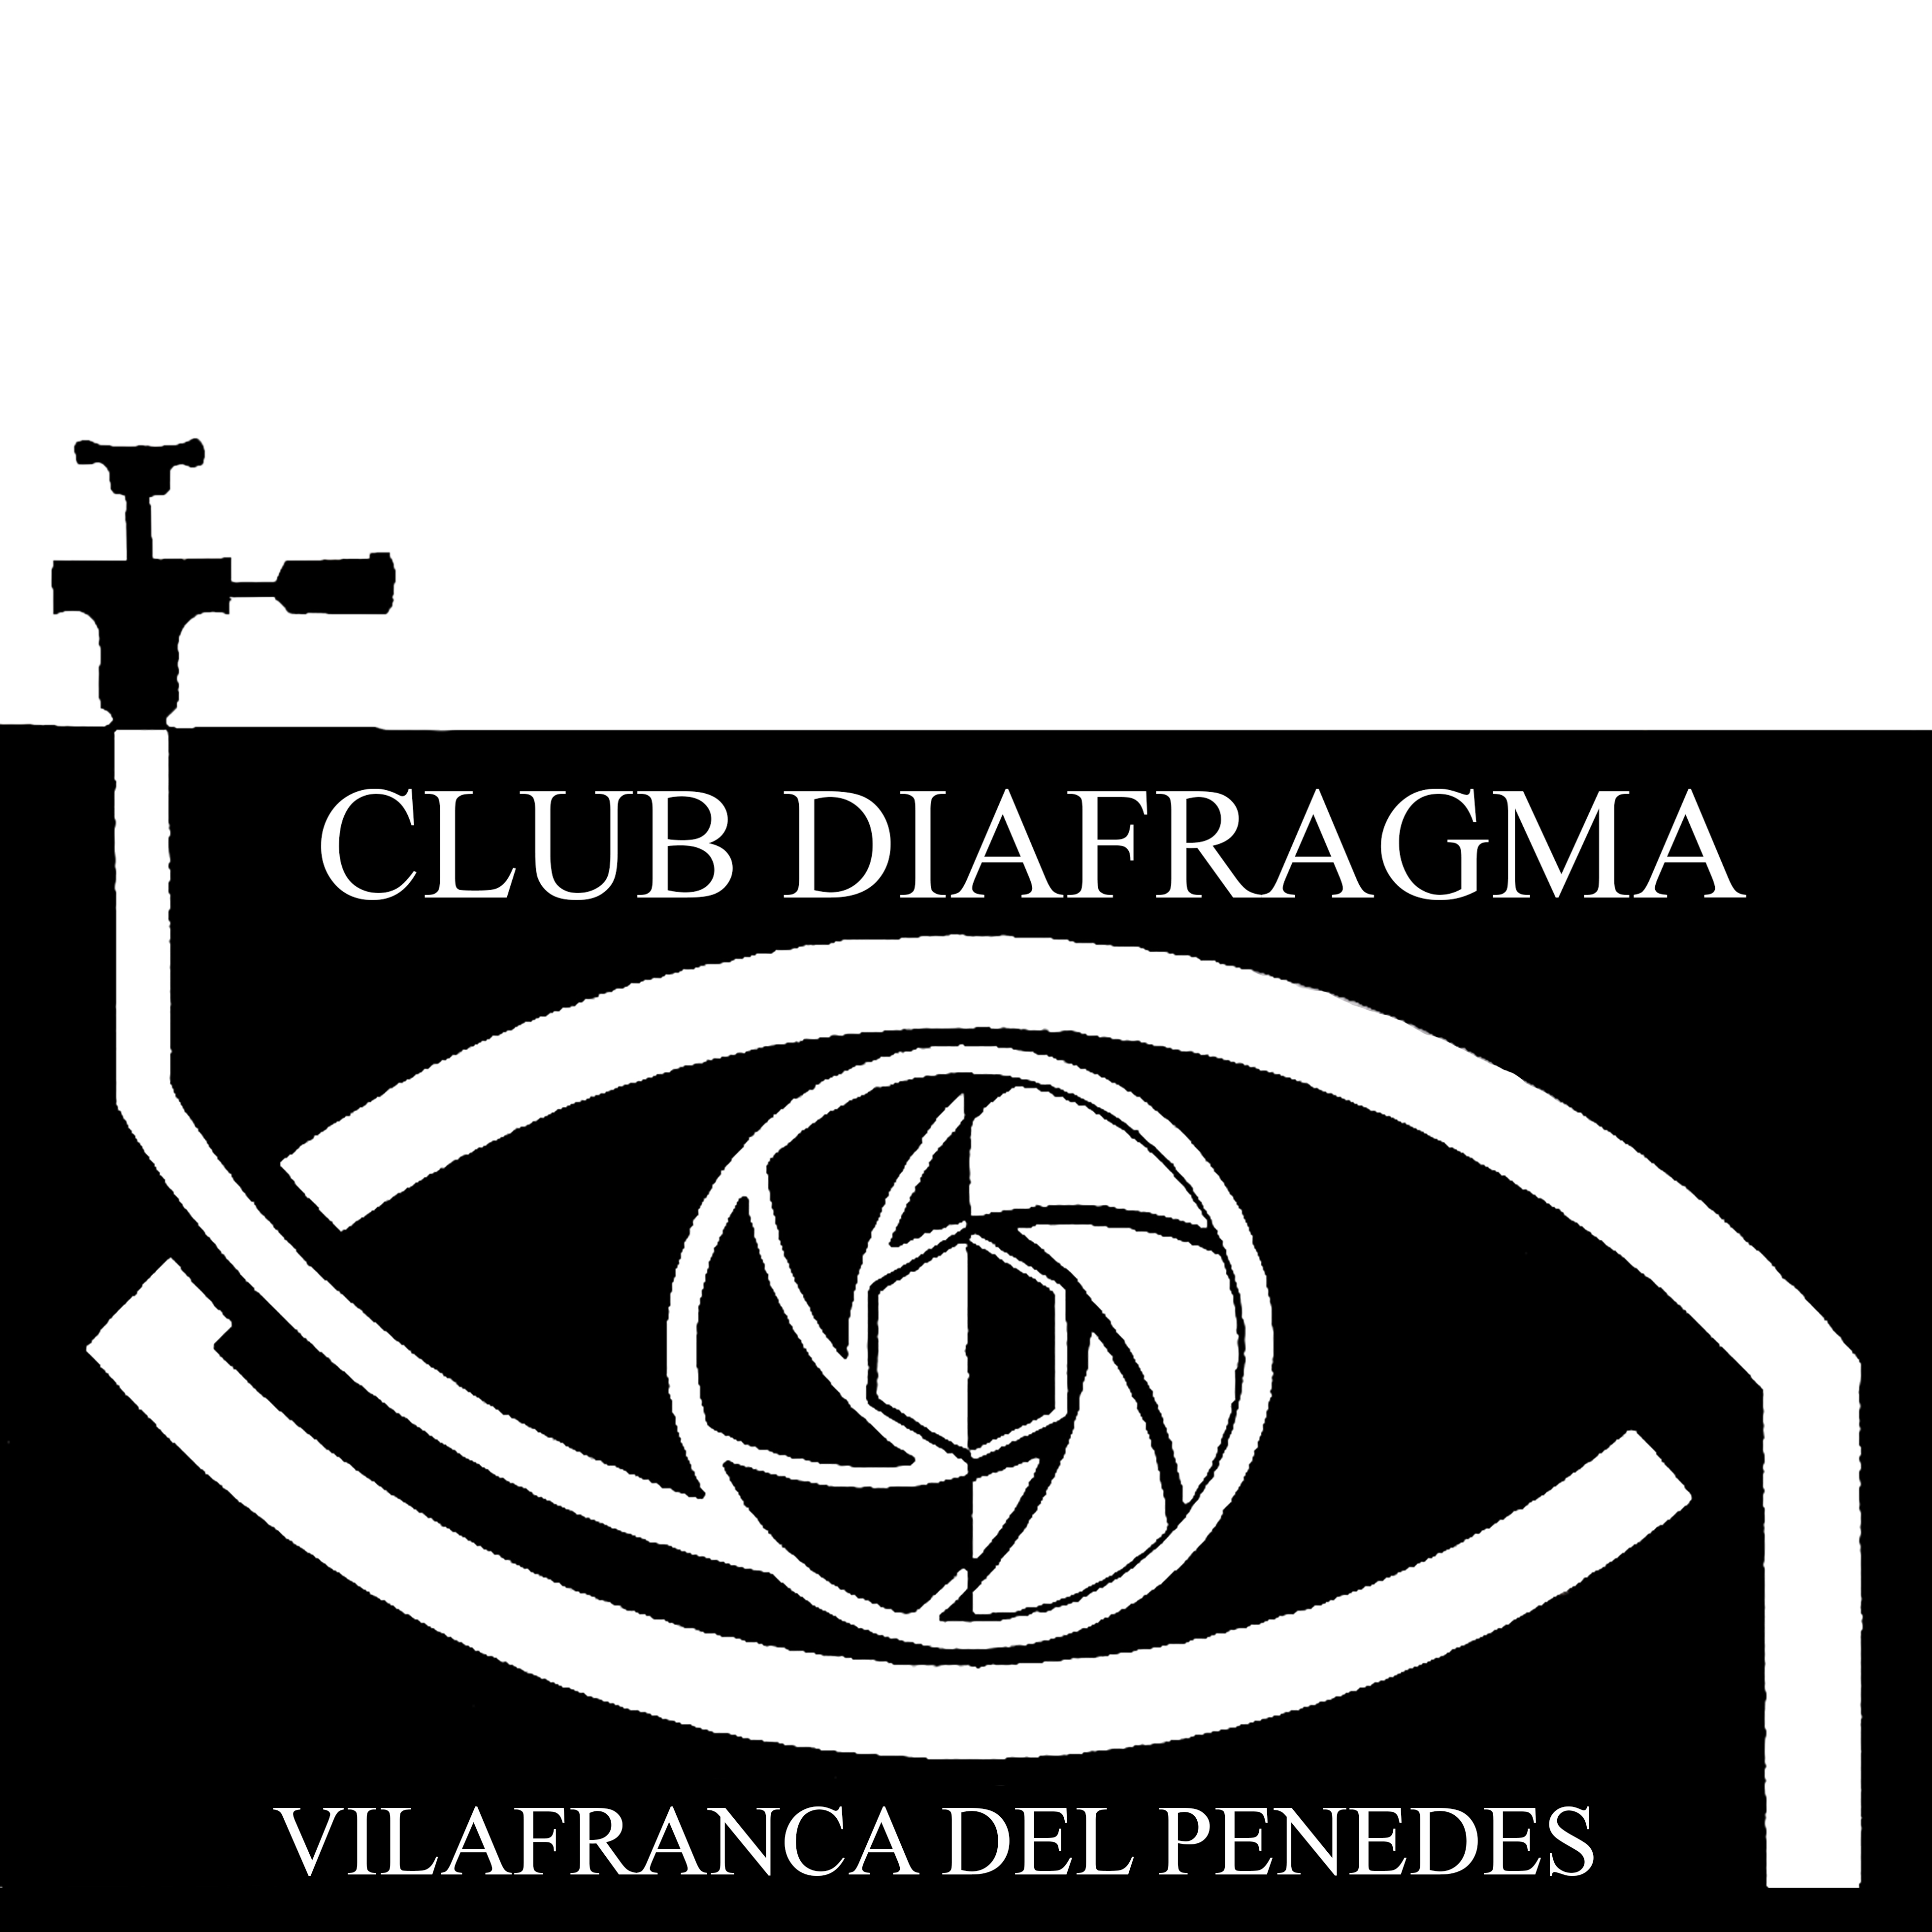 CLUB DIAFRAGMA VILAFRANCA